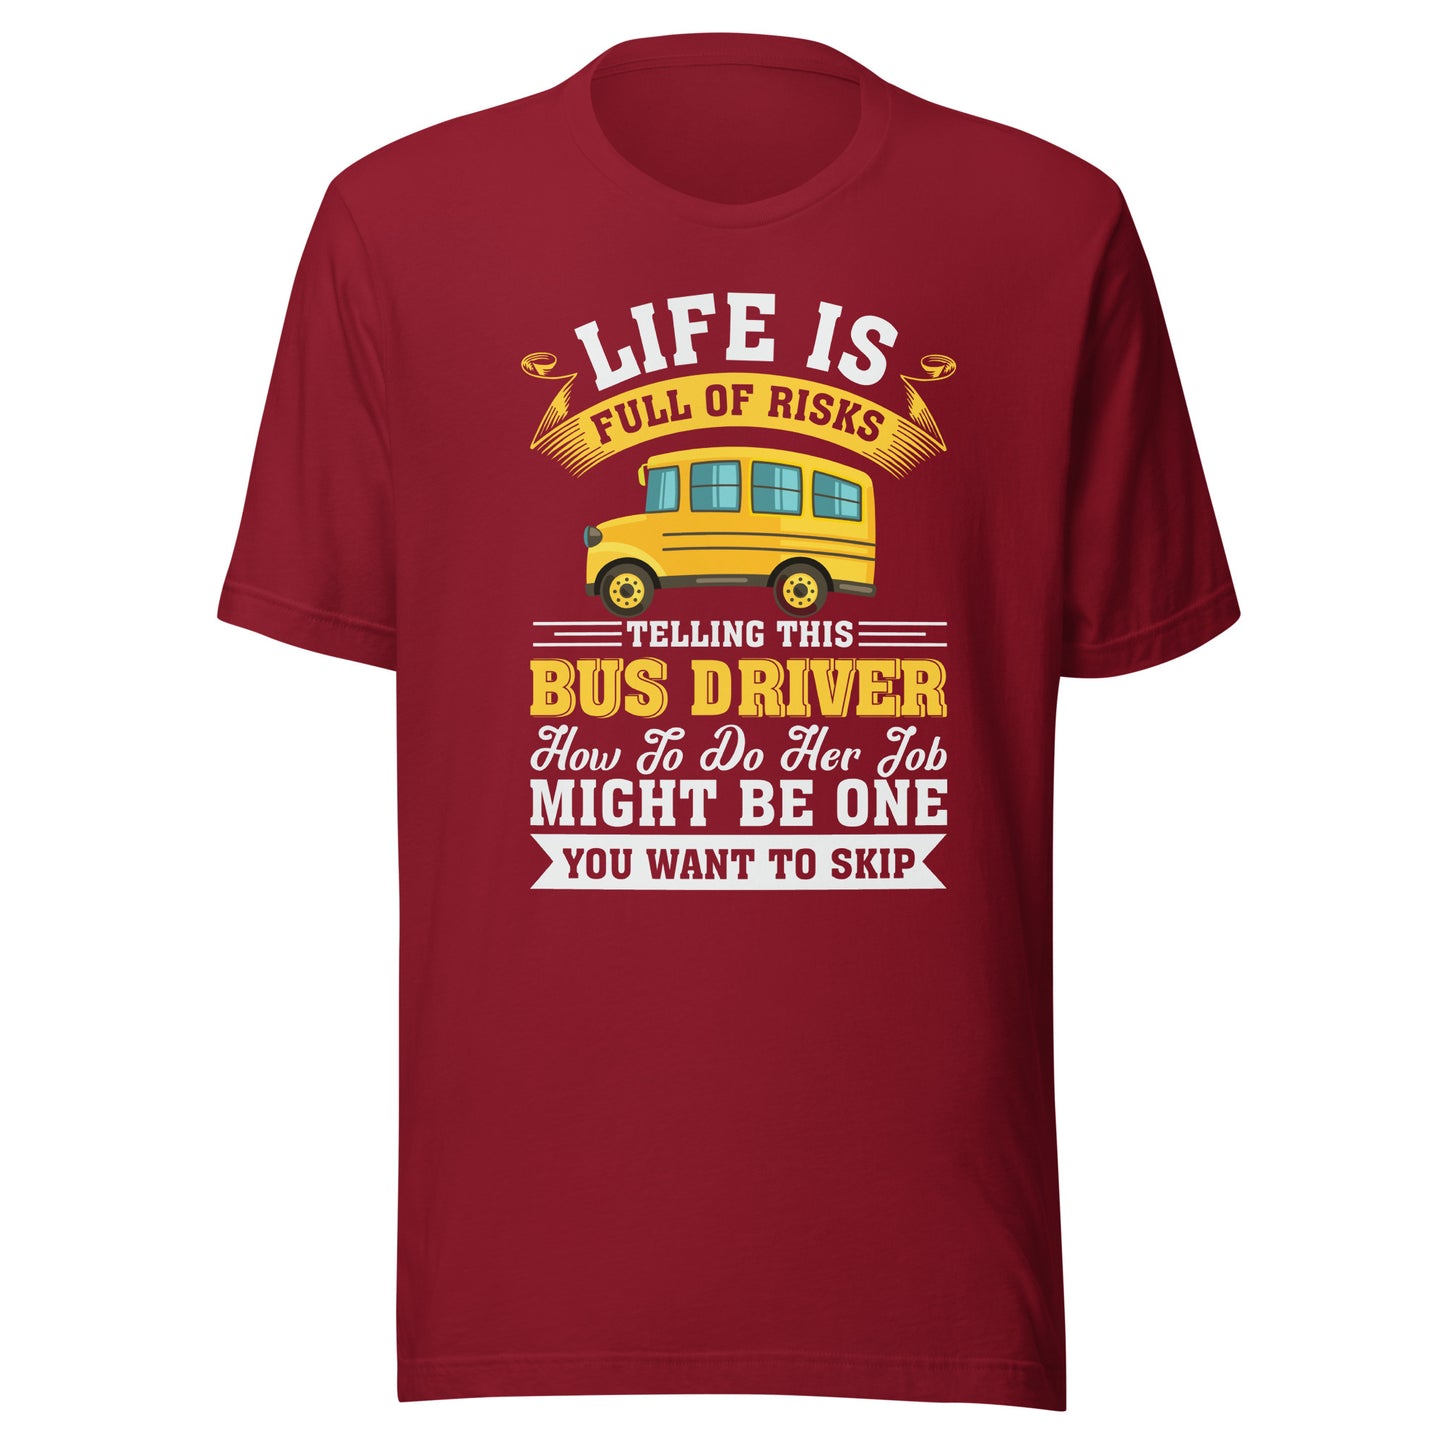 "Bus Driver Life" Unisex T-shirt